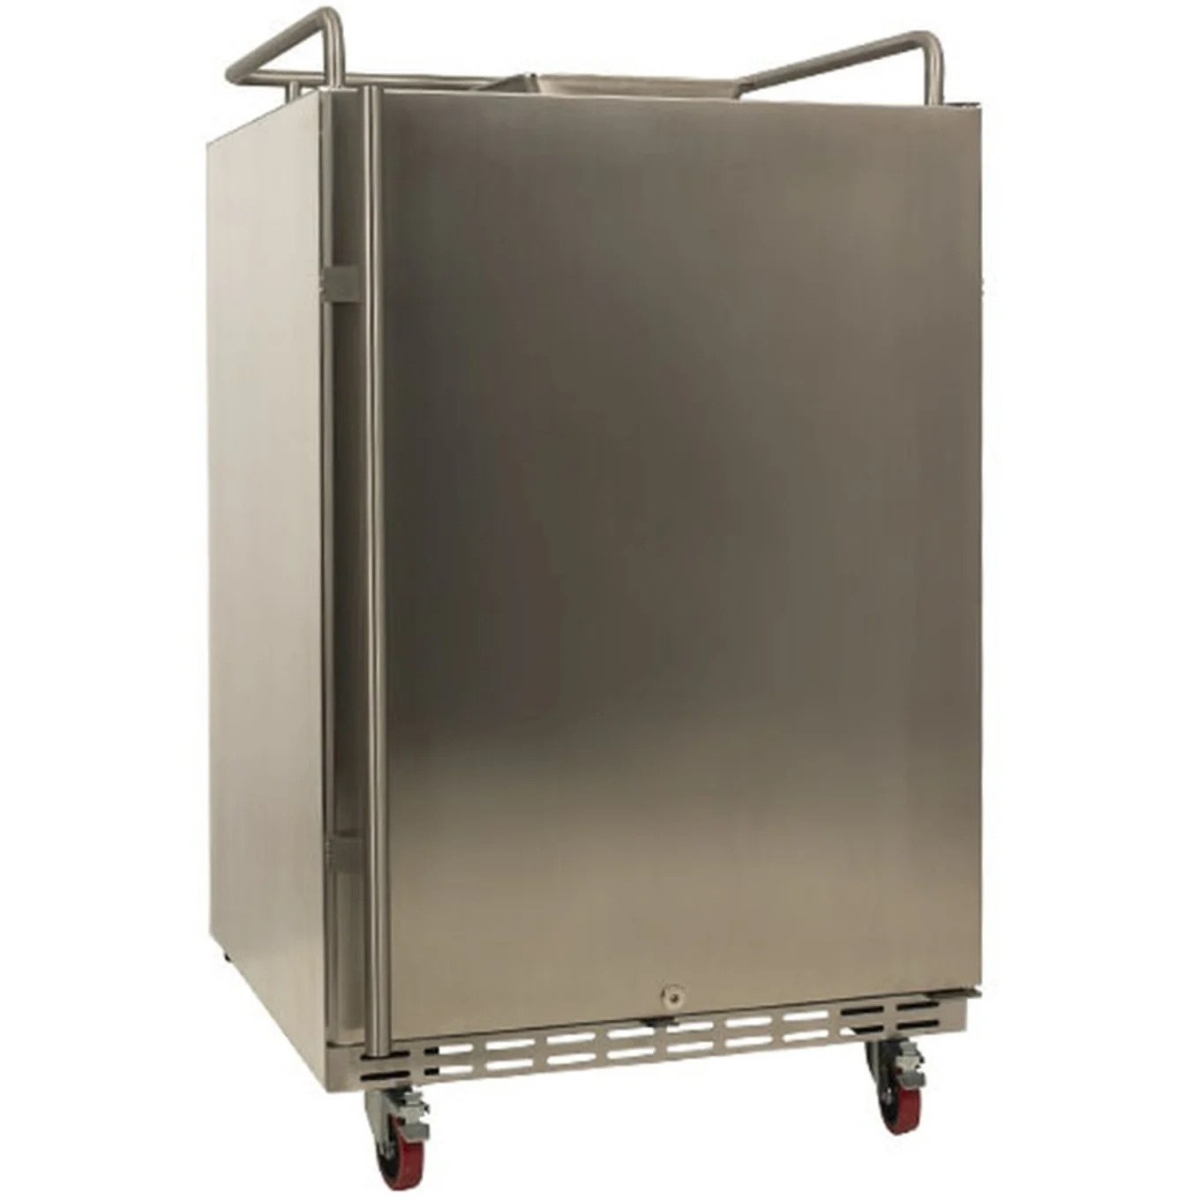 Picture of EdgeStar BR7001SSOD Built-in Outdoor Kegerator Conversion Refrigerator, Stainless Steel